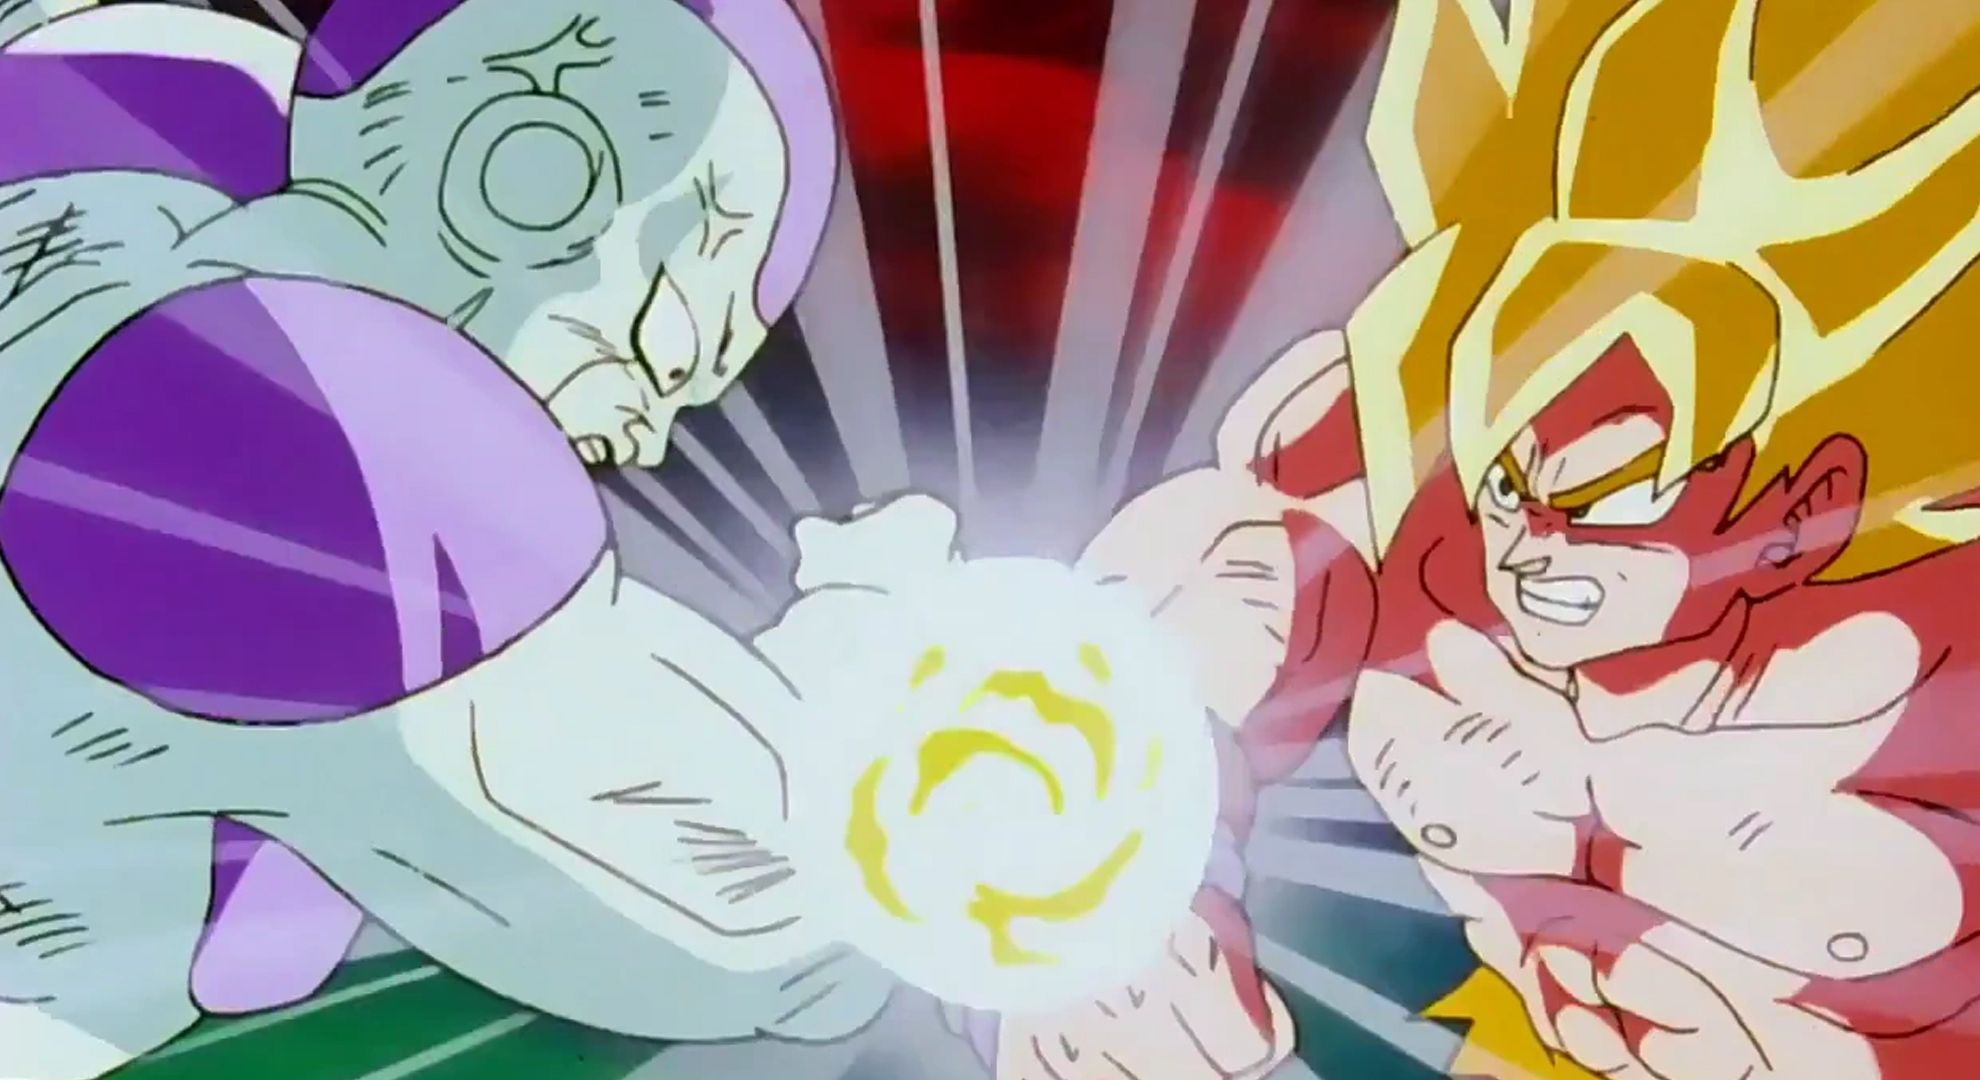 Goku versus Freeza in the Namek Saga